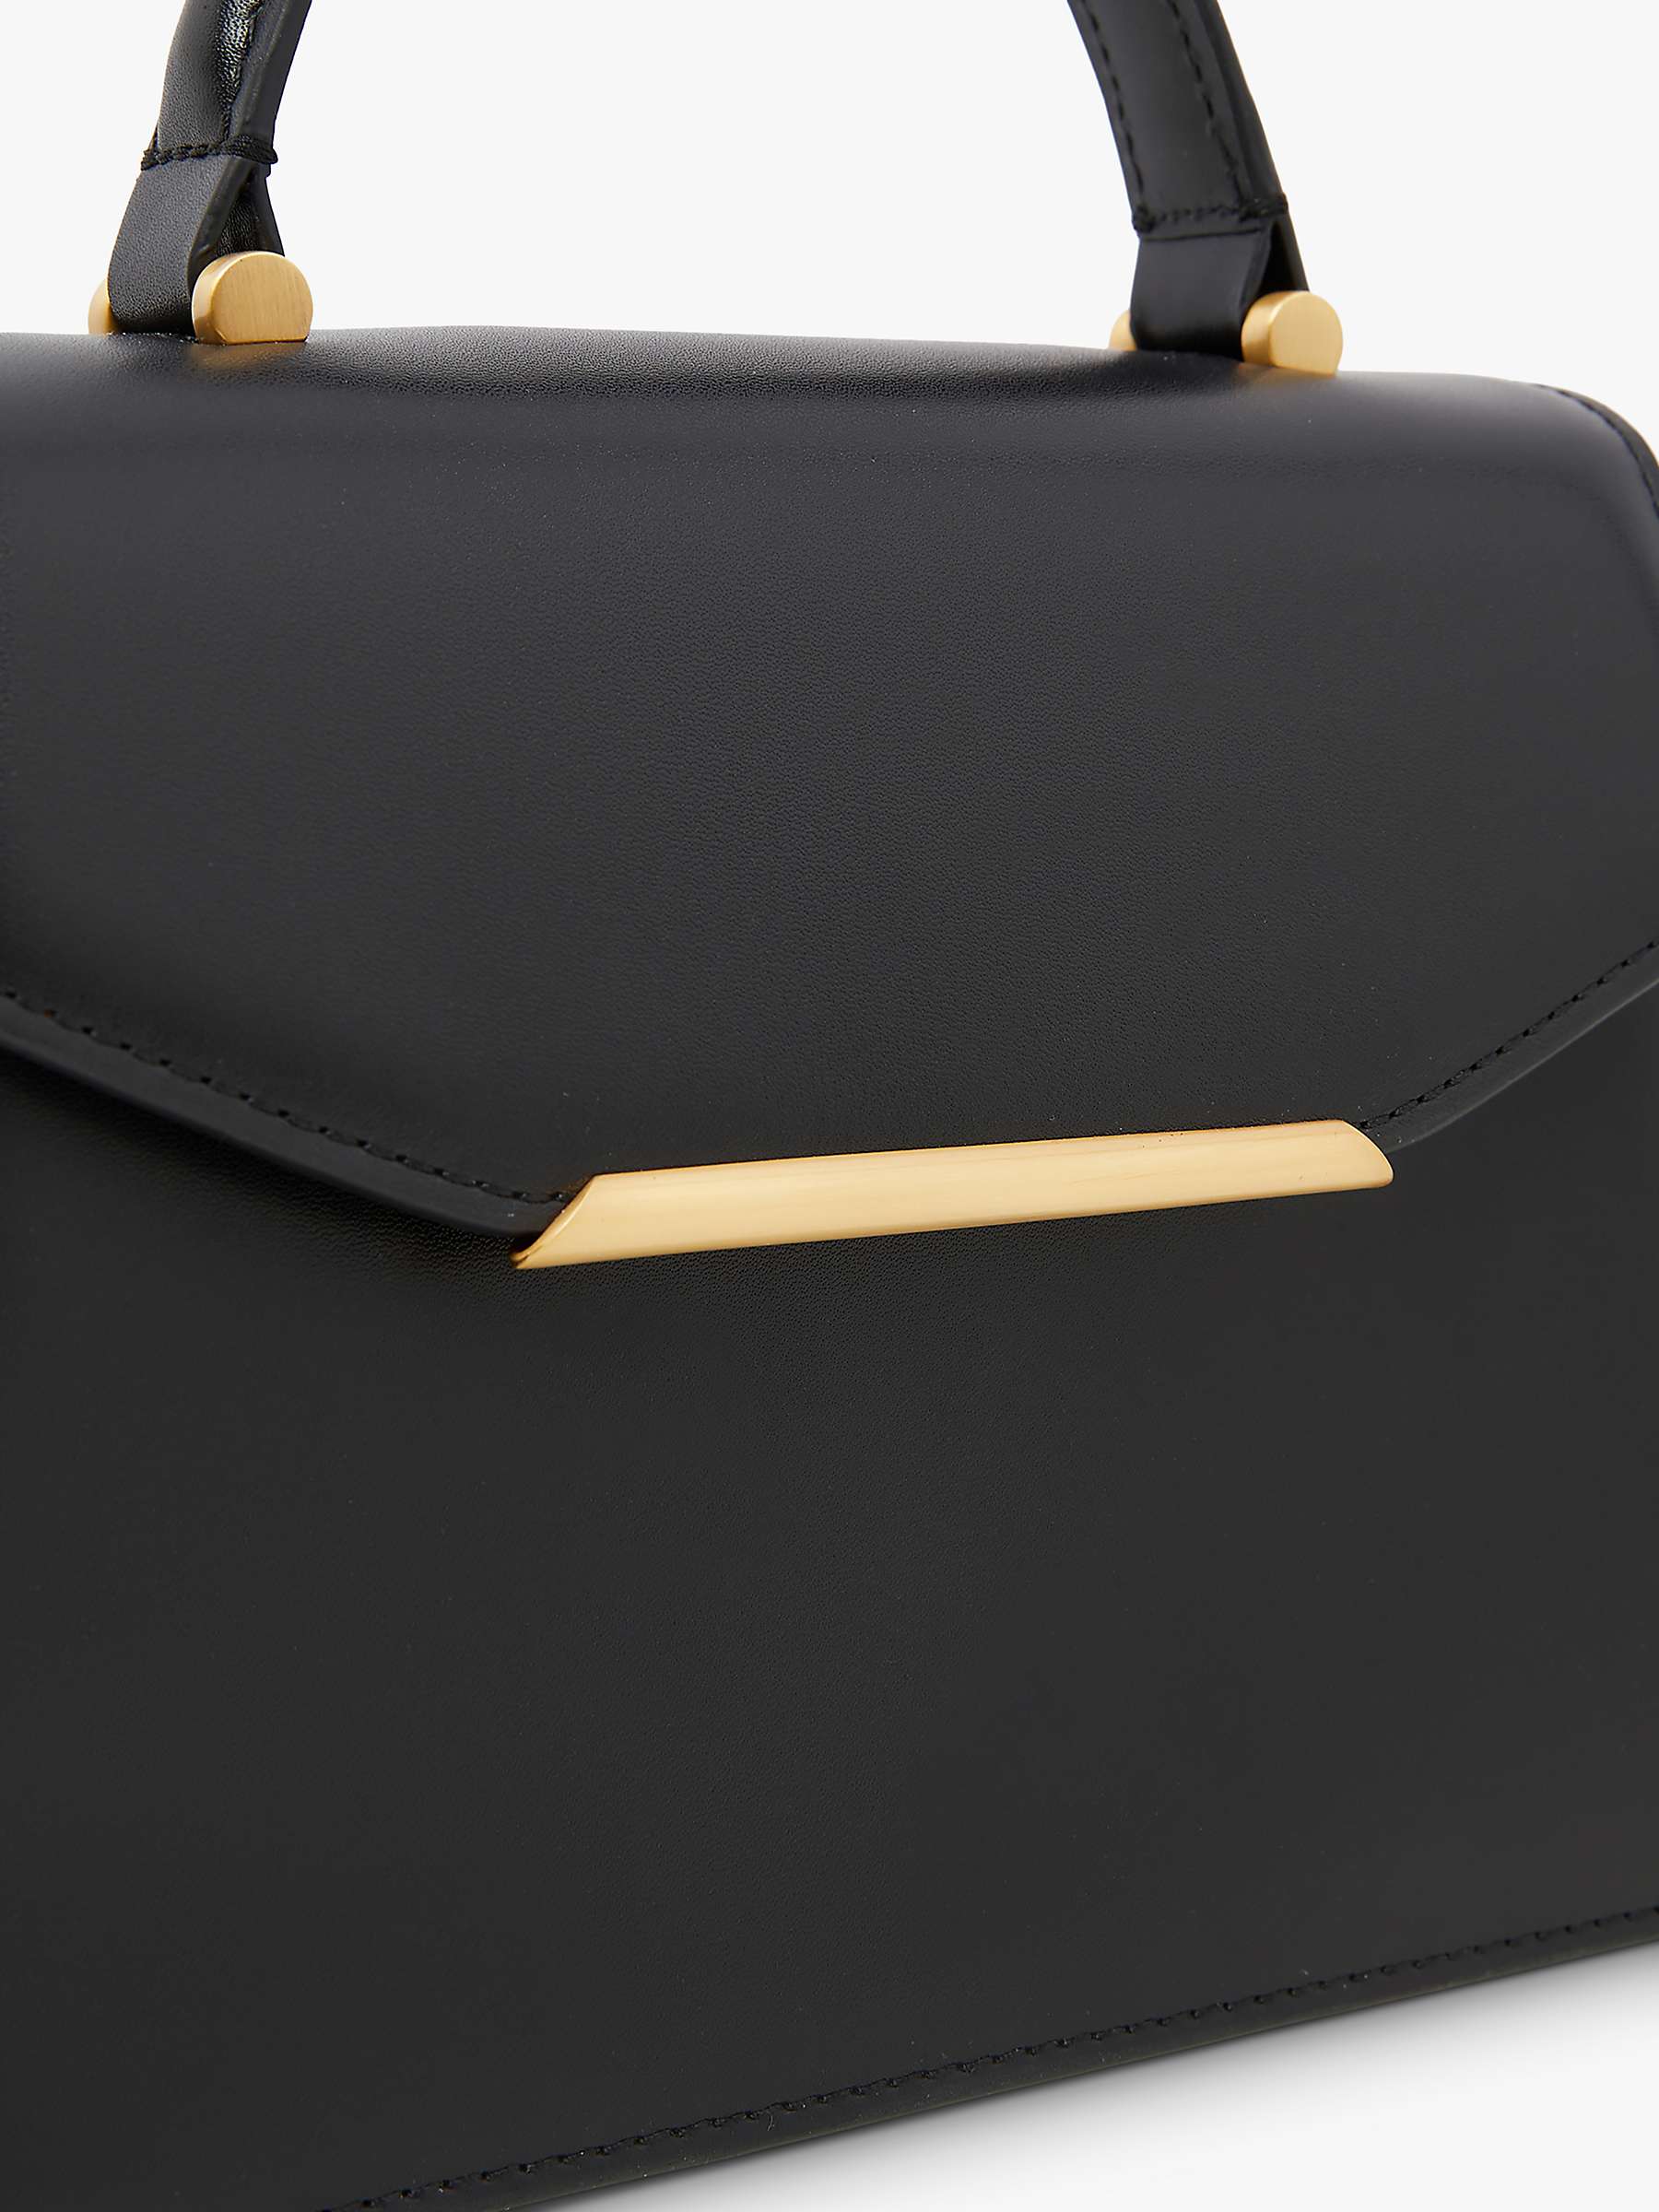 Buy Jasper Conran London Francine Top Handle Leather Grab Bag Online at johnlewis.com